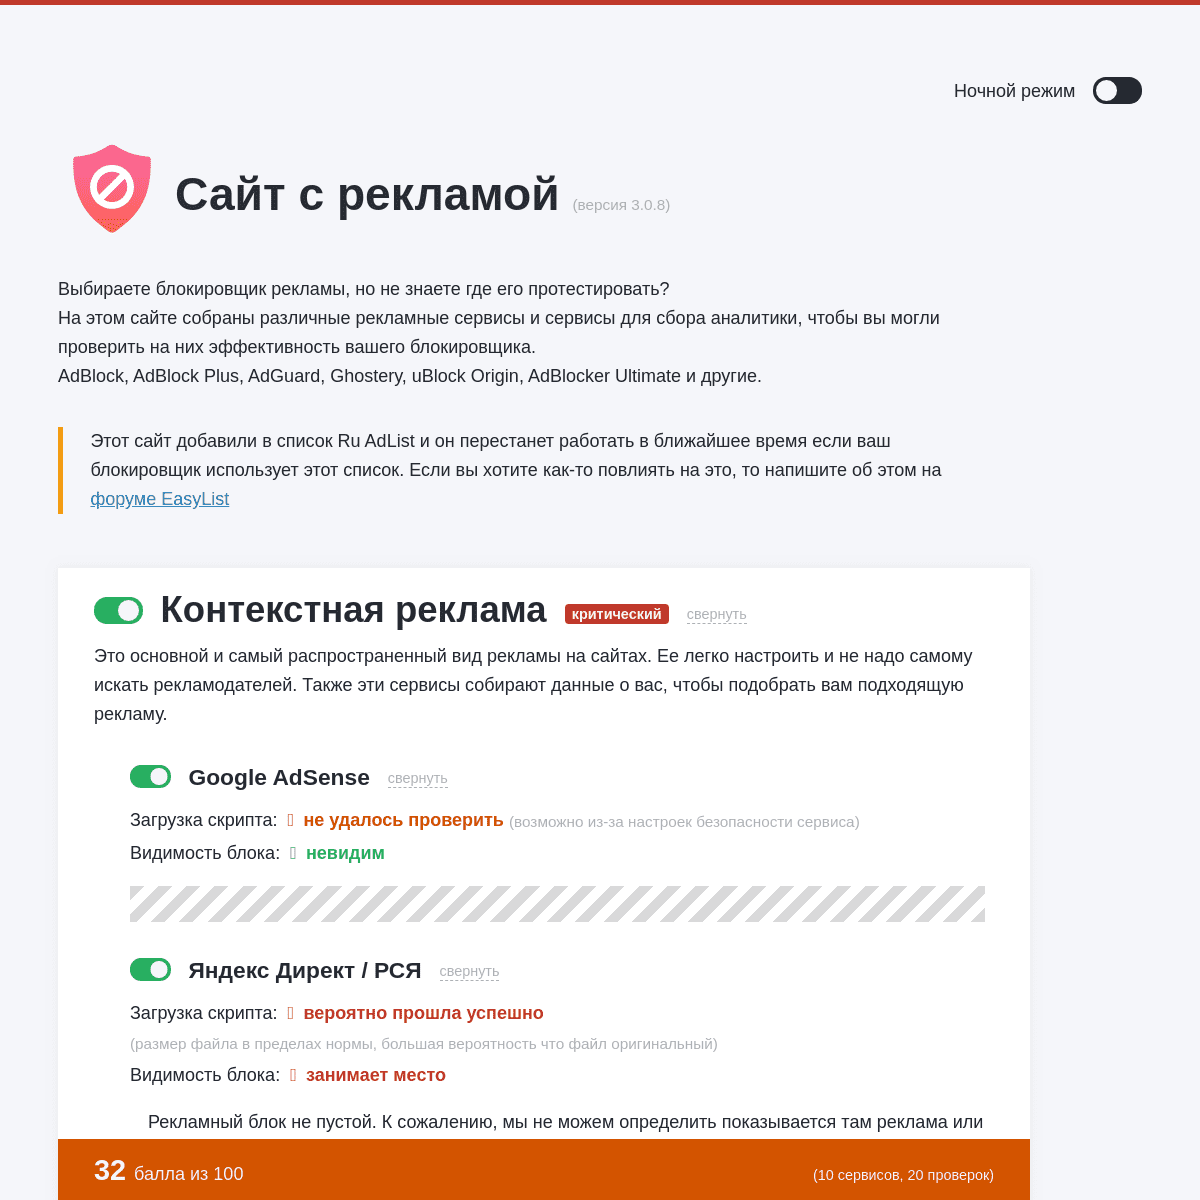 A complete backup of checkadblock.ru